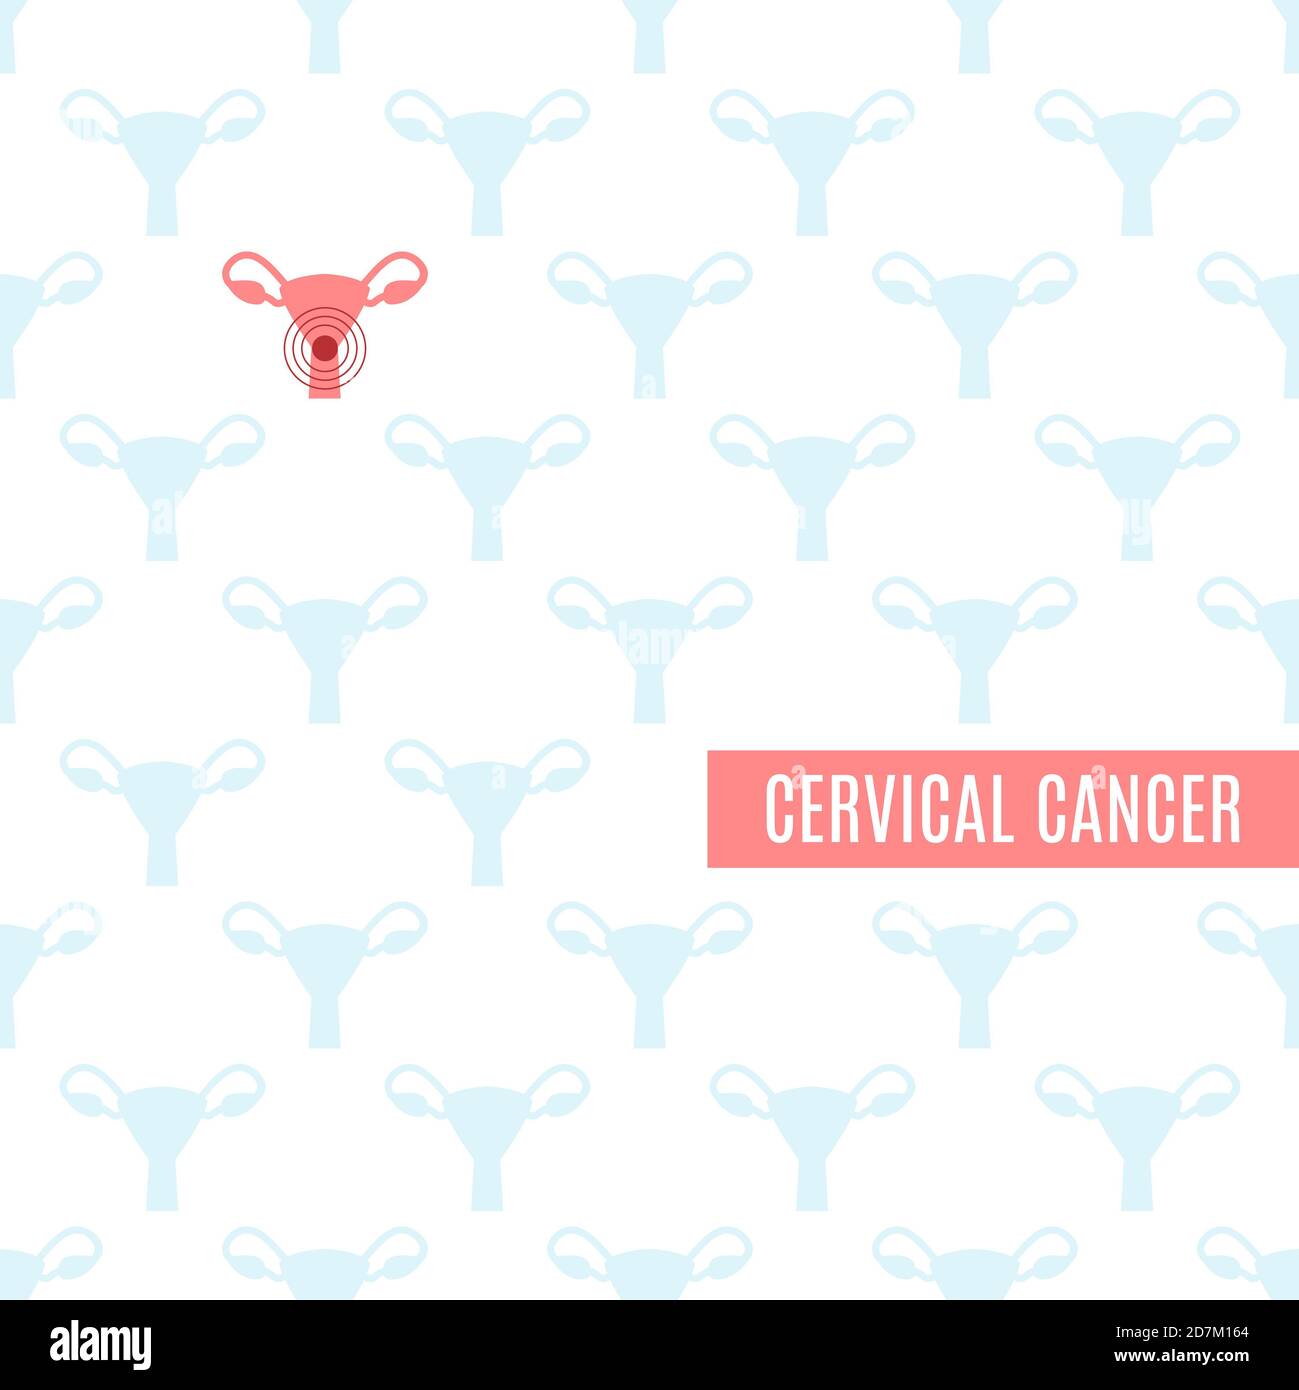 Cervical cancer poster, conceptual illustration Stock Photo - Alamy